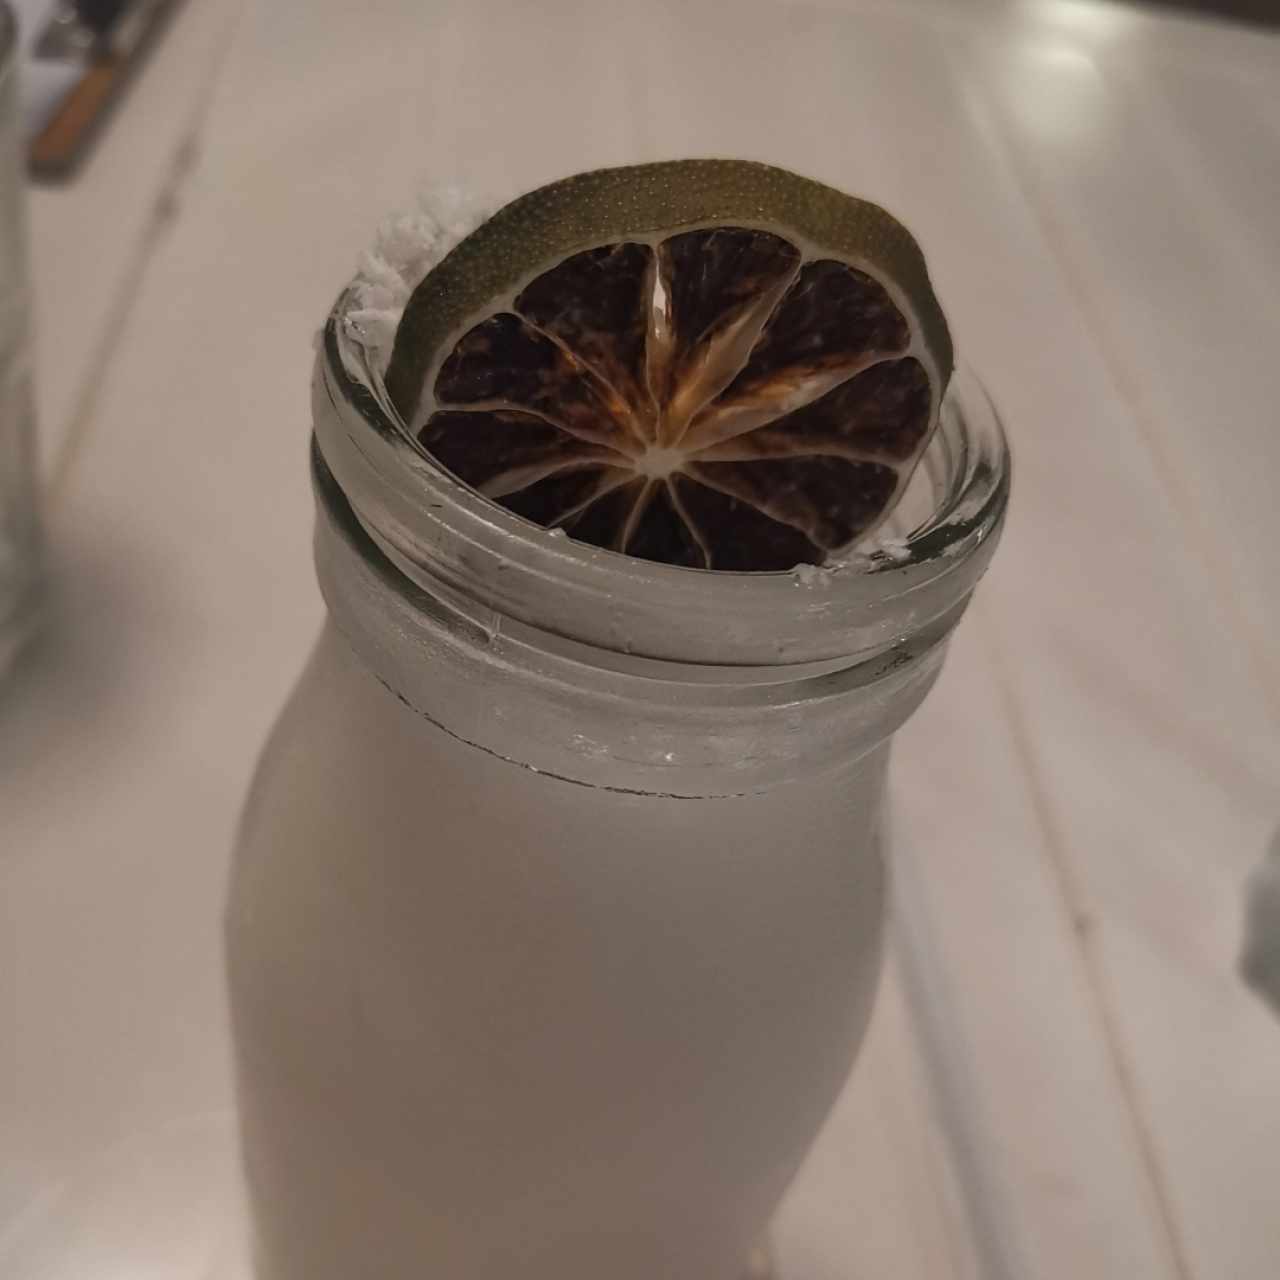 Limonada de coco